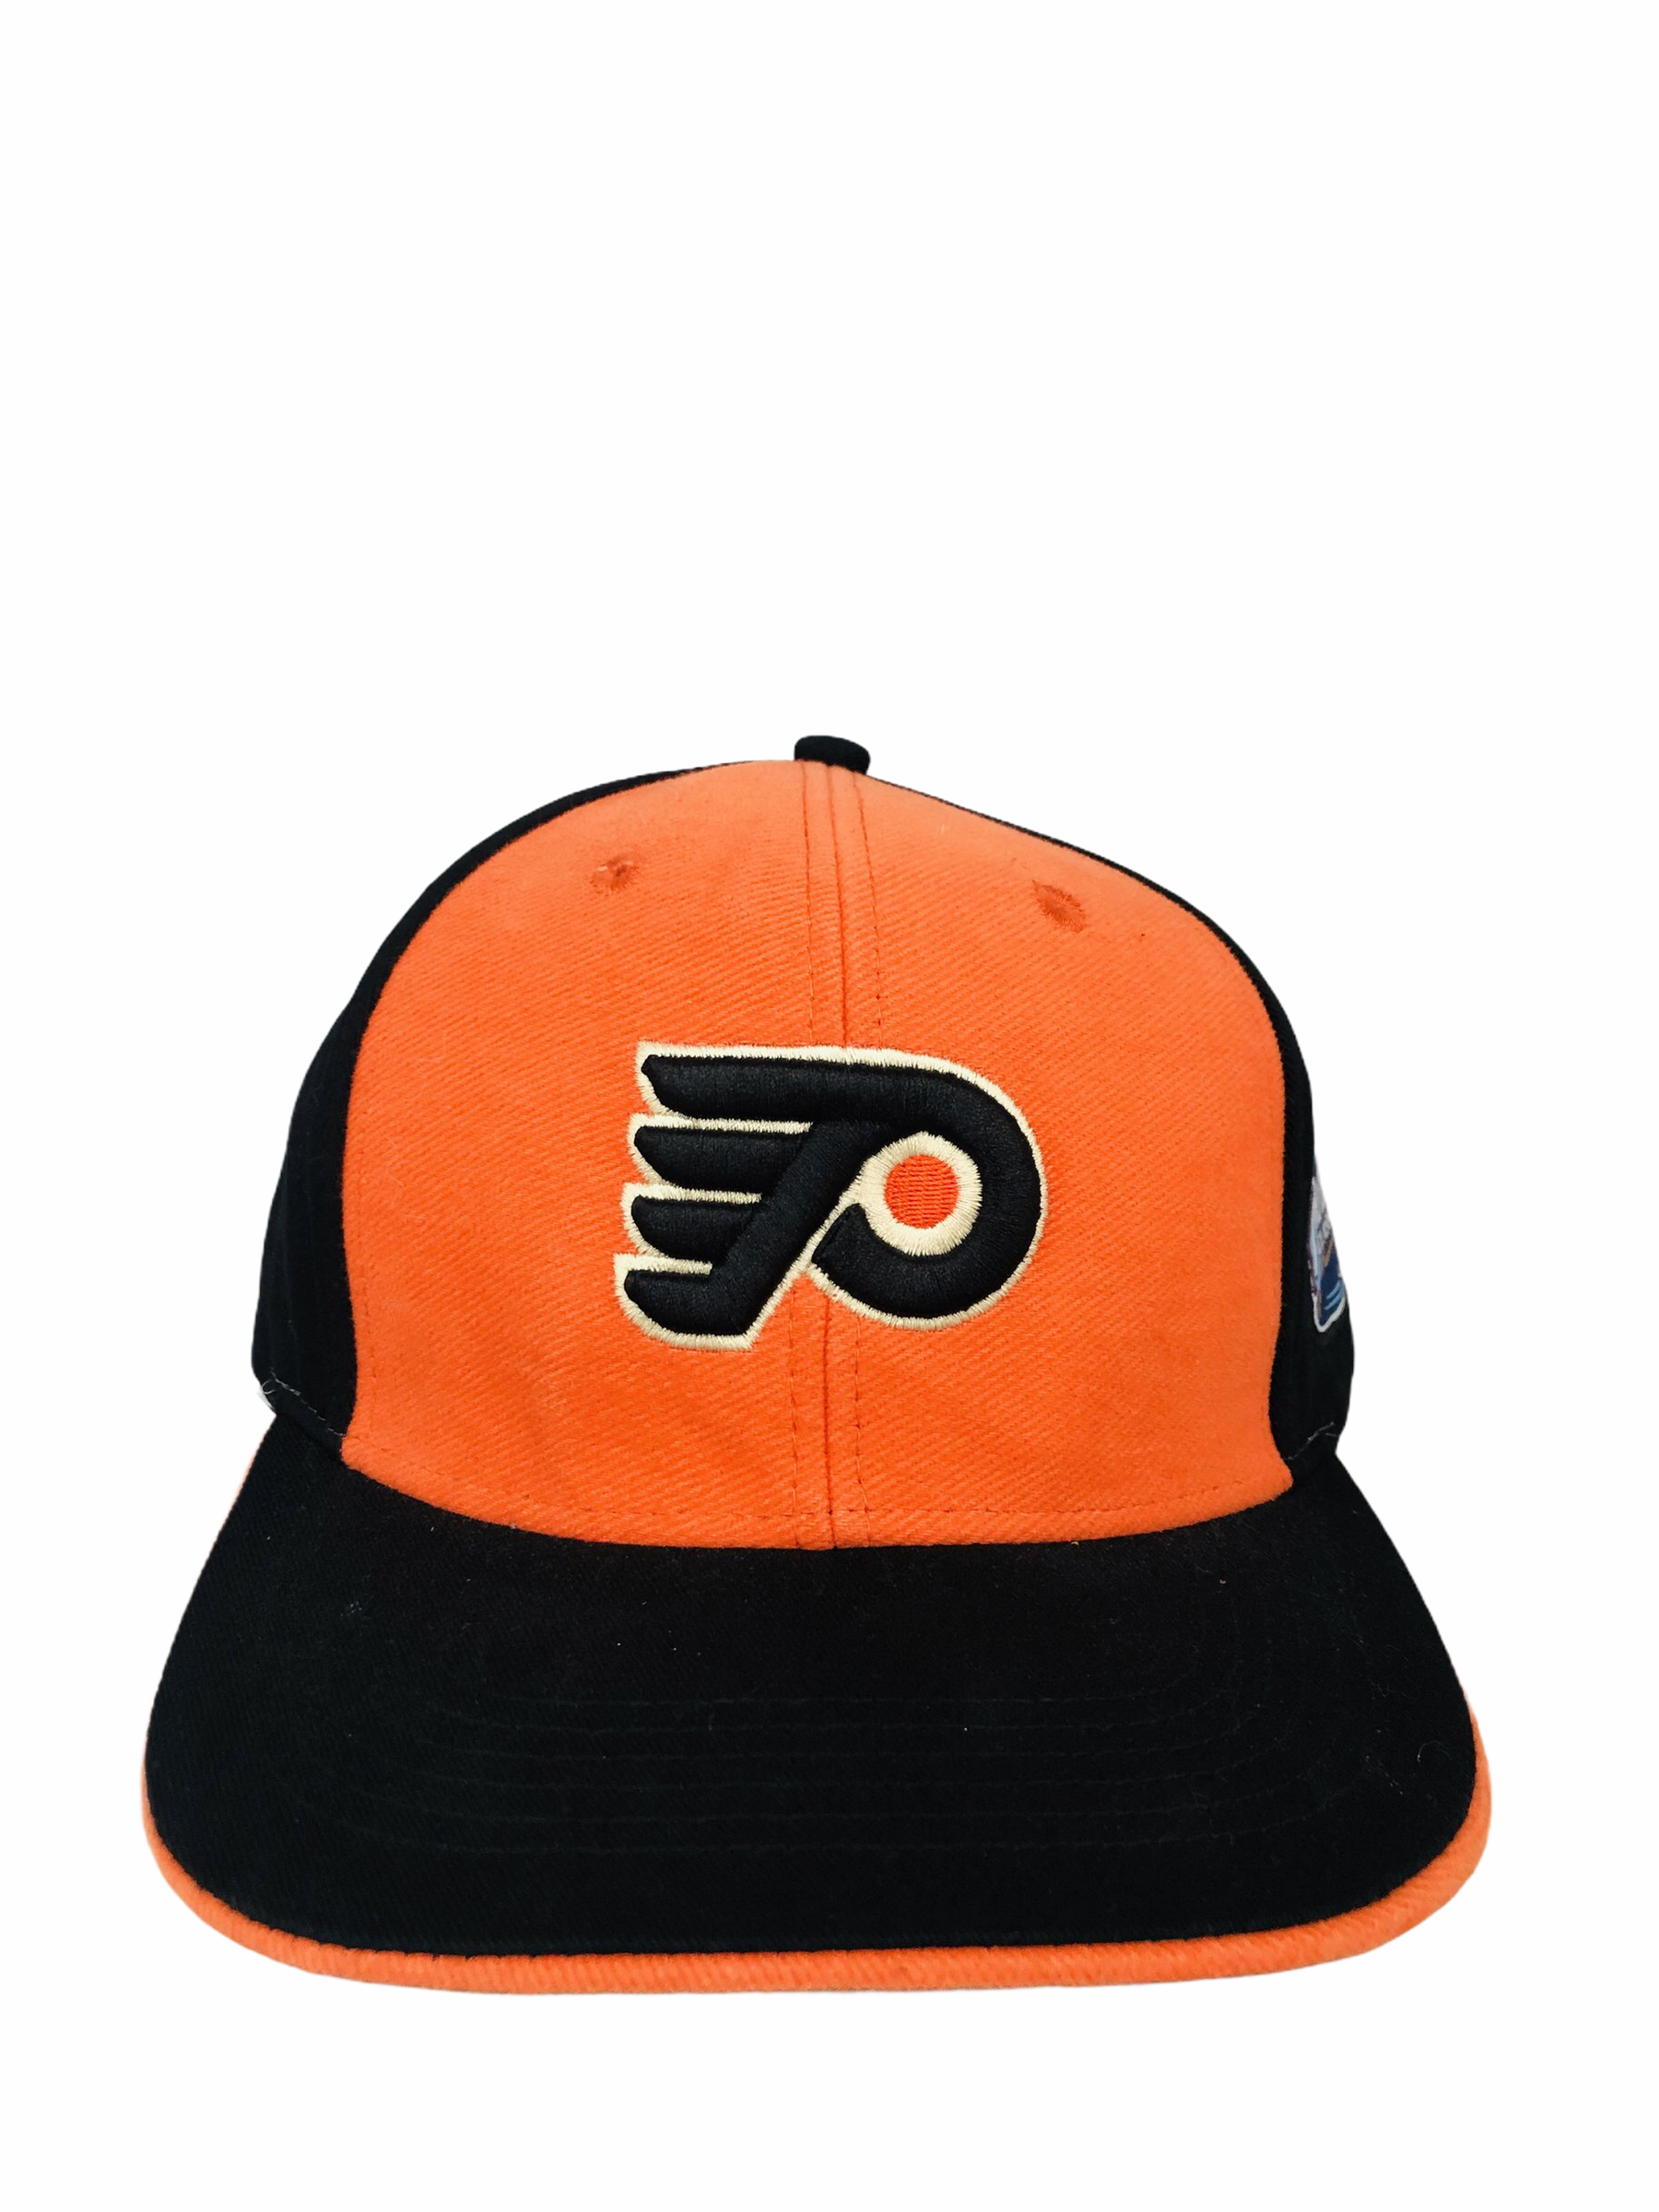 Reebok, Accessories, Pittsburgh Penguins Hat